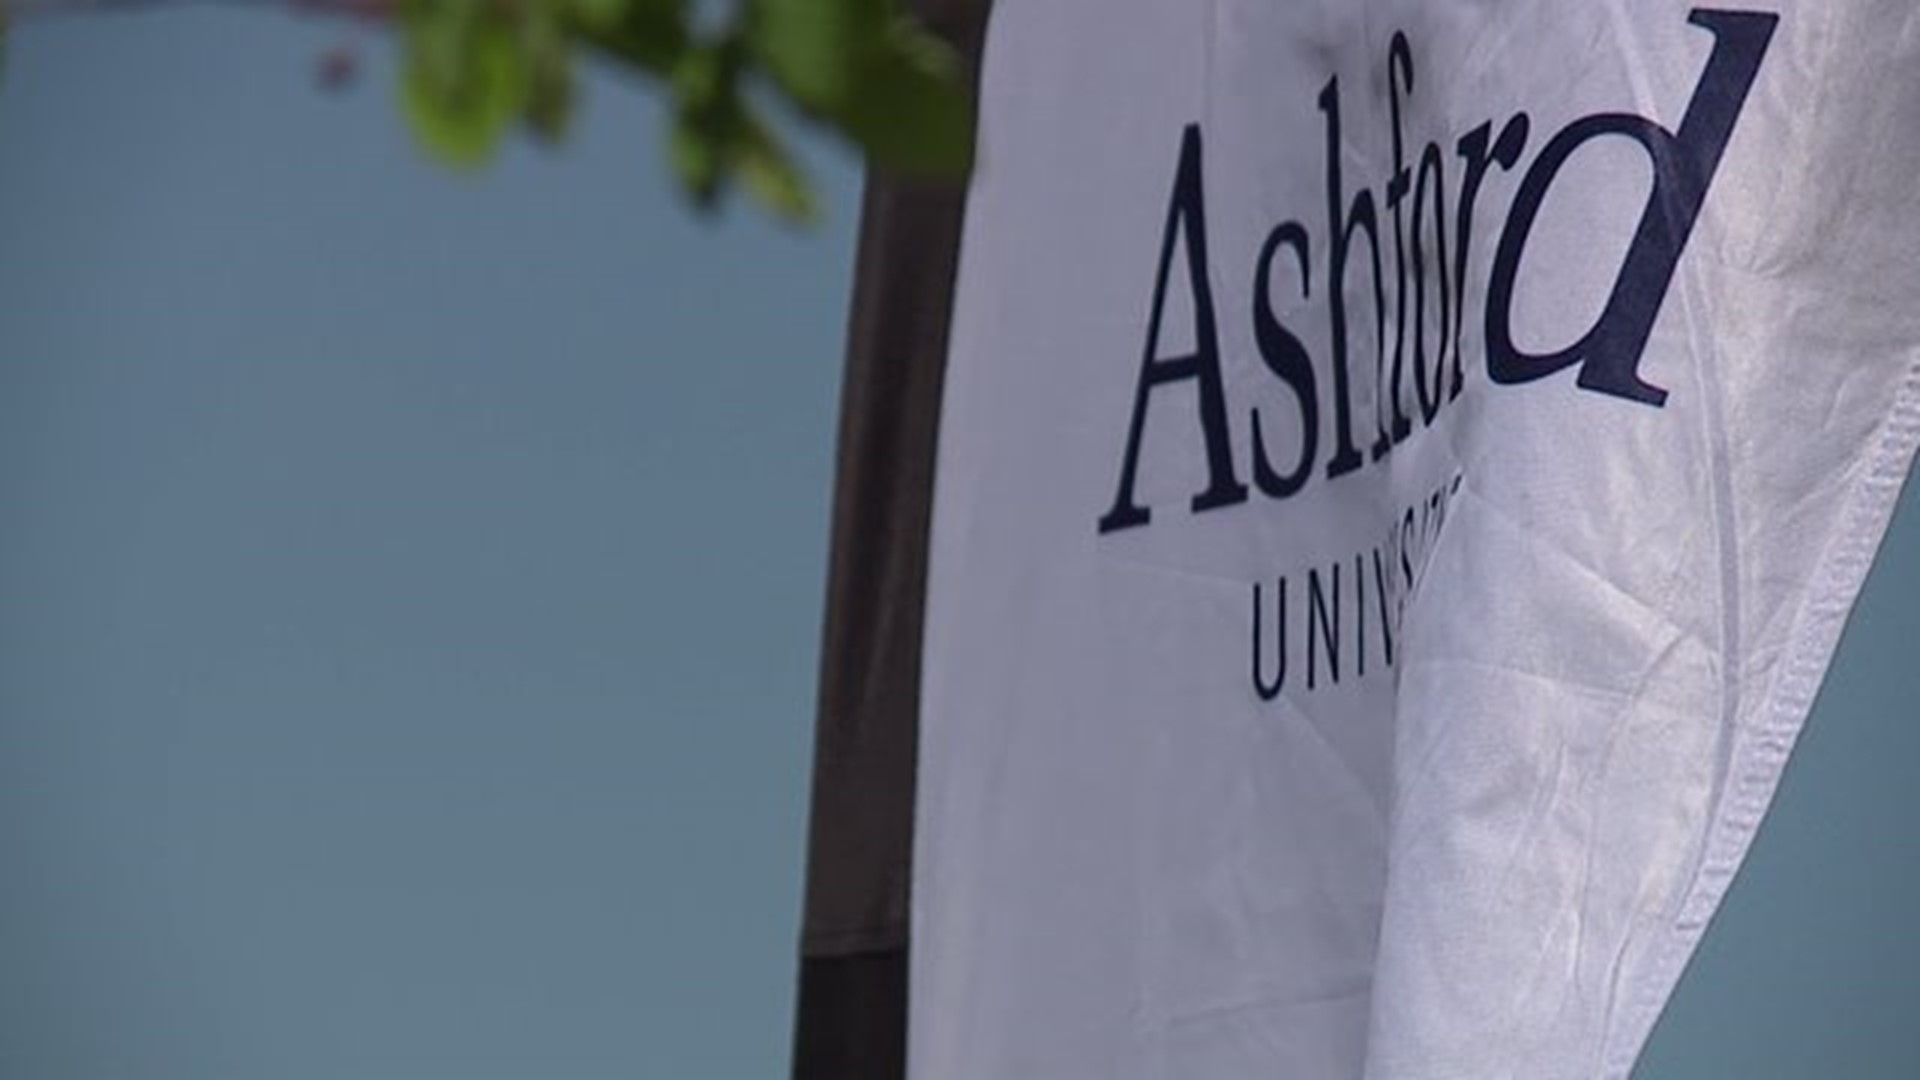 Ashford University Preps for Final Graduation